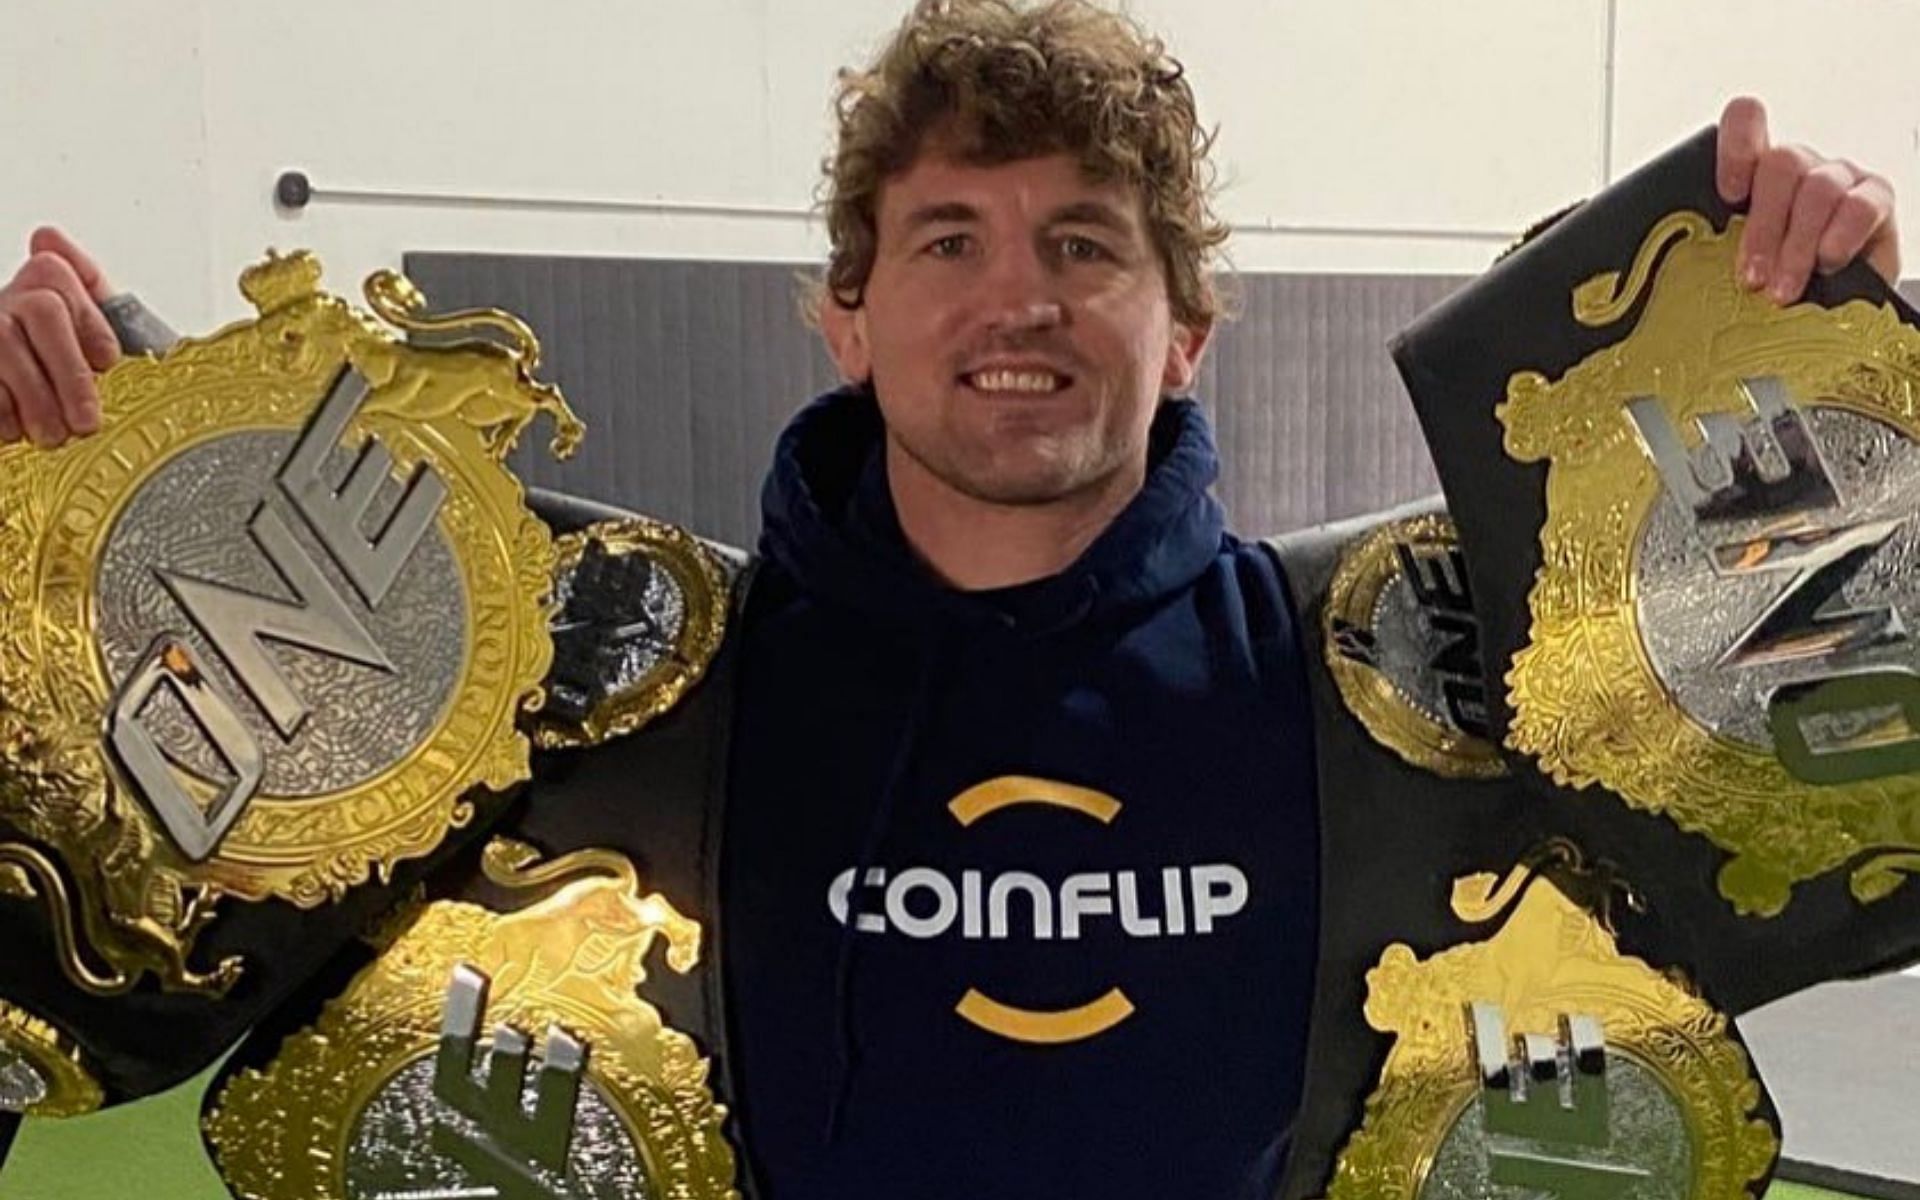 Ben Askren poses with his belts from One Championship and Bellator. Image credits: Instagram/benaskren